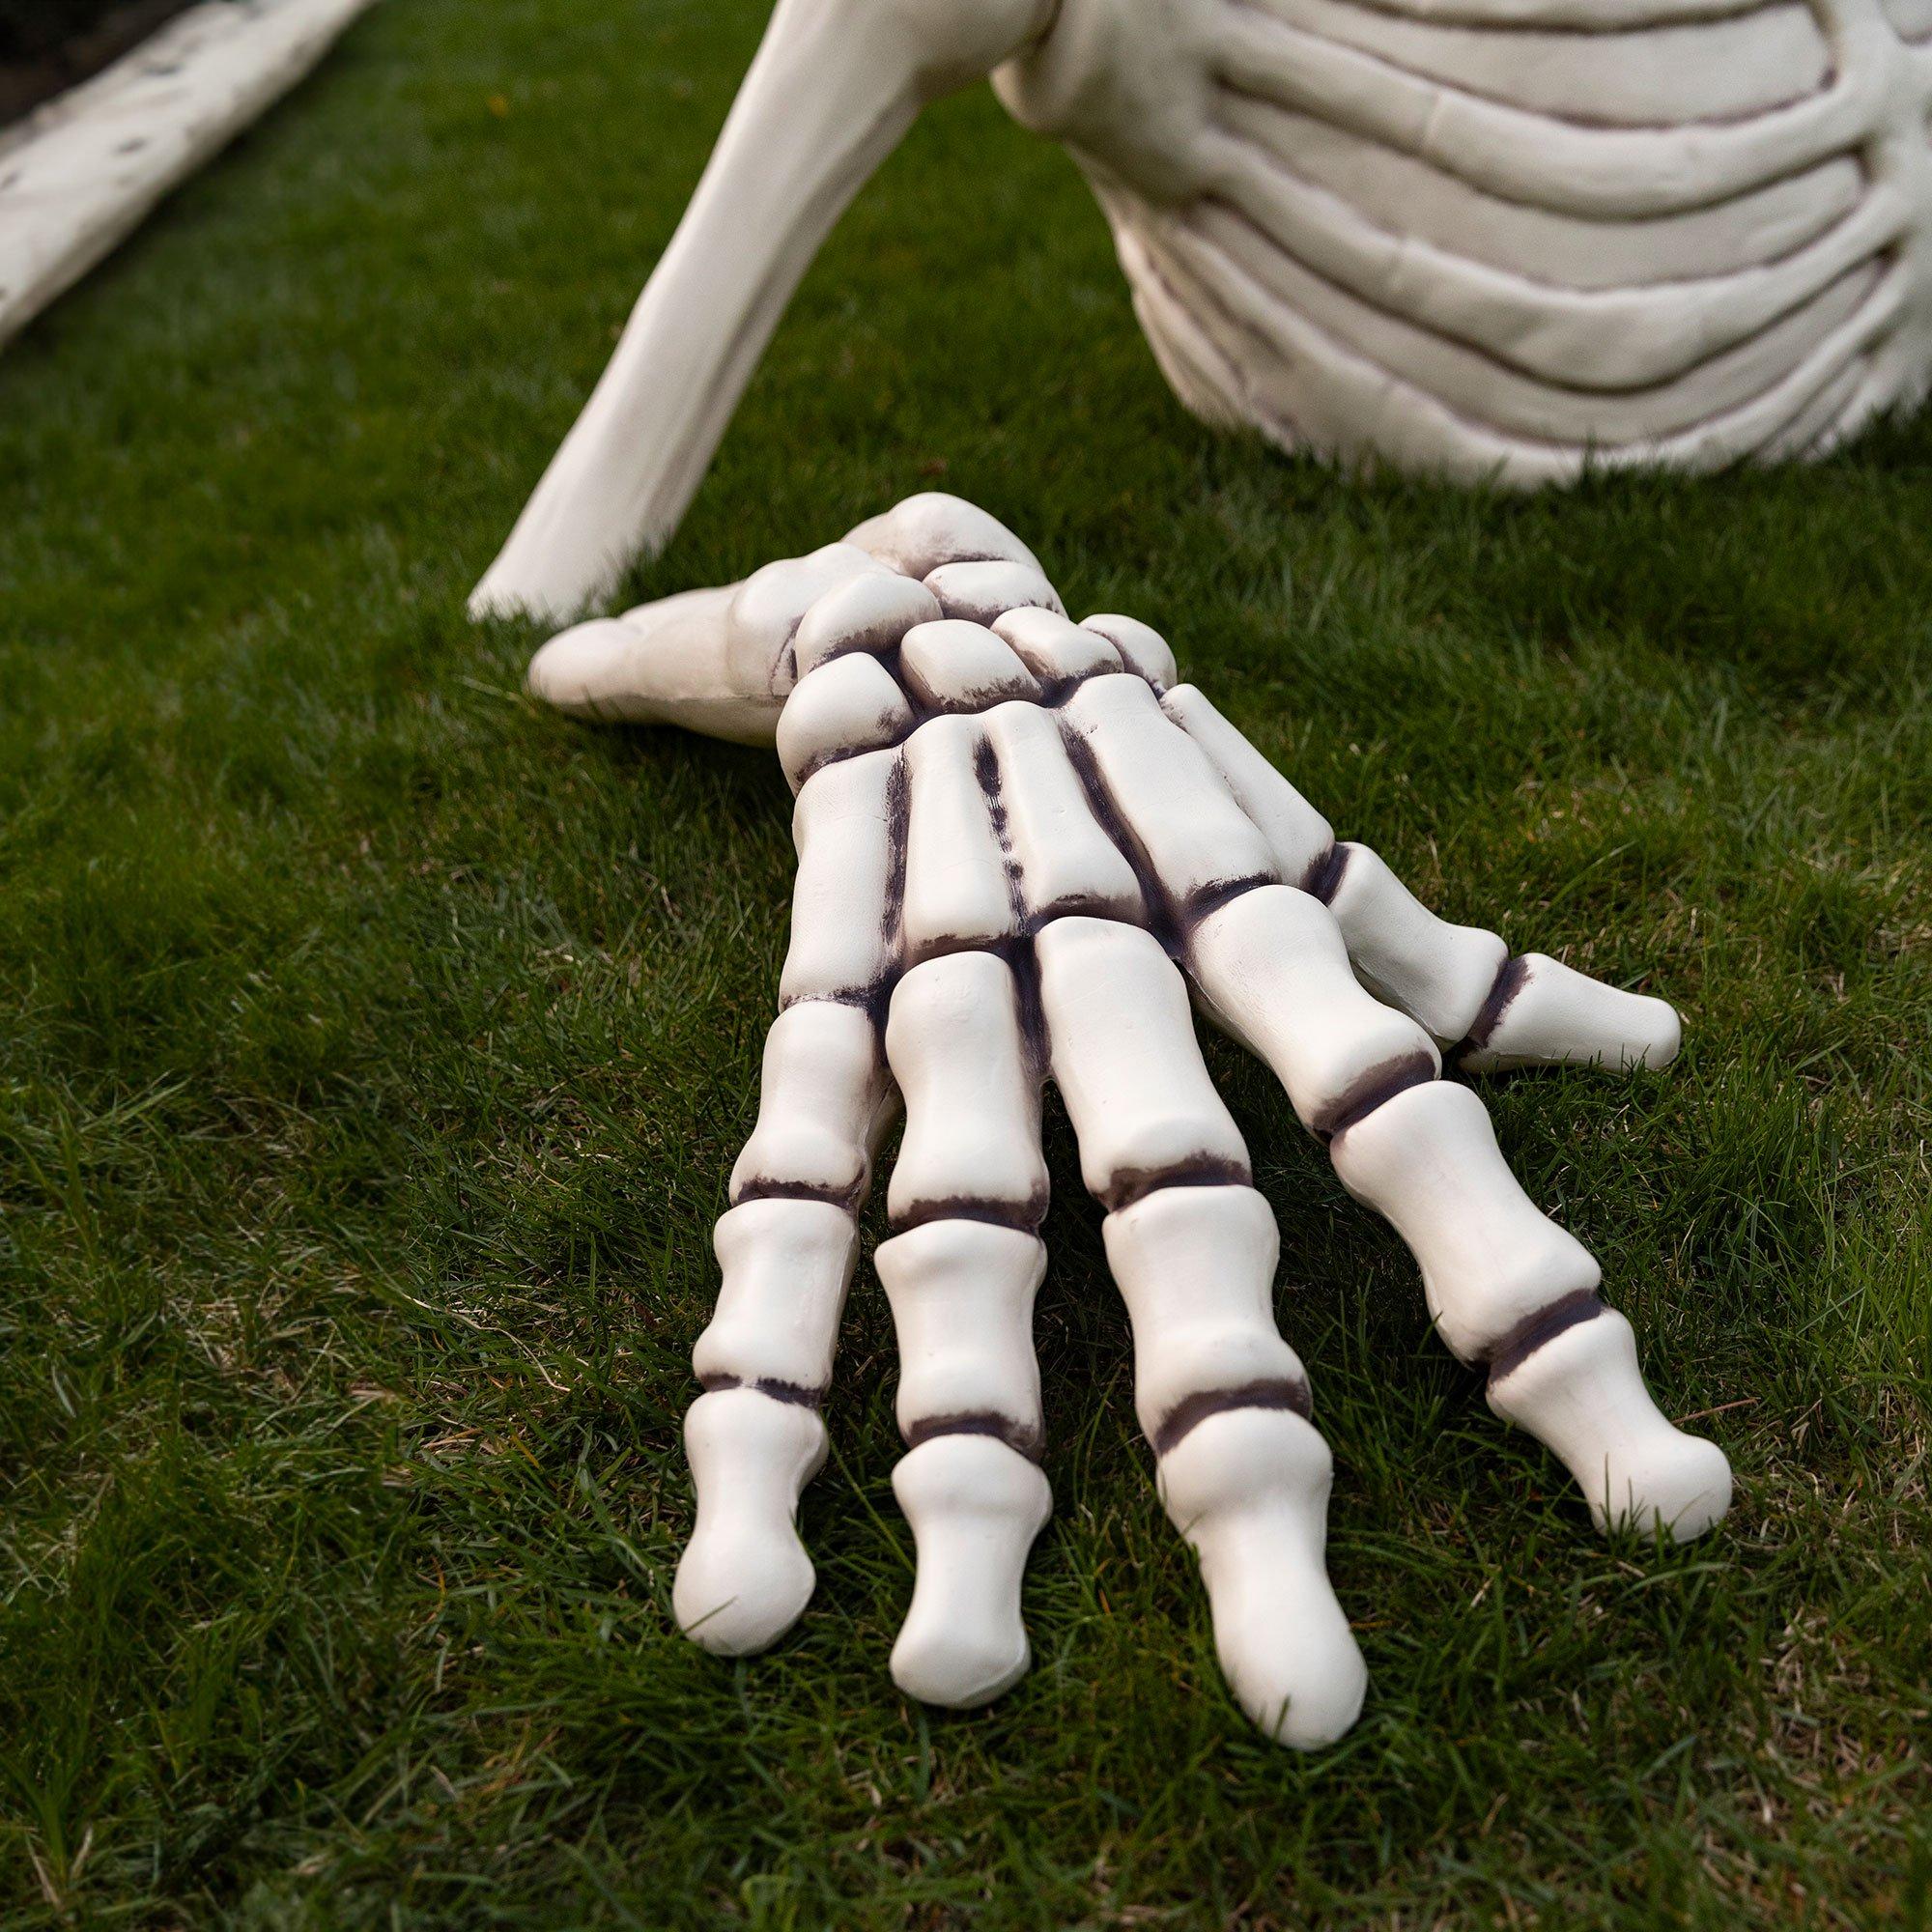 Giant Rattles the Groundbreaking Skeleton Plastic Yard Decorating Kit, 5.3ft